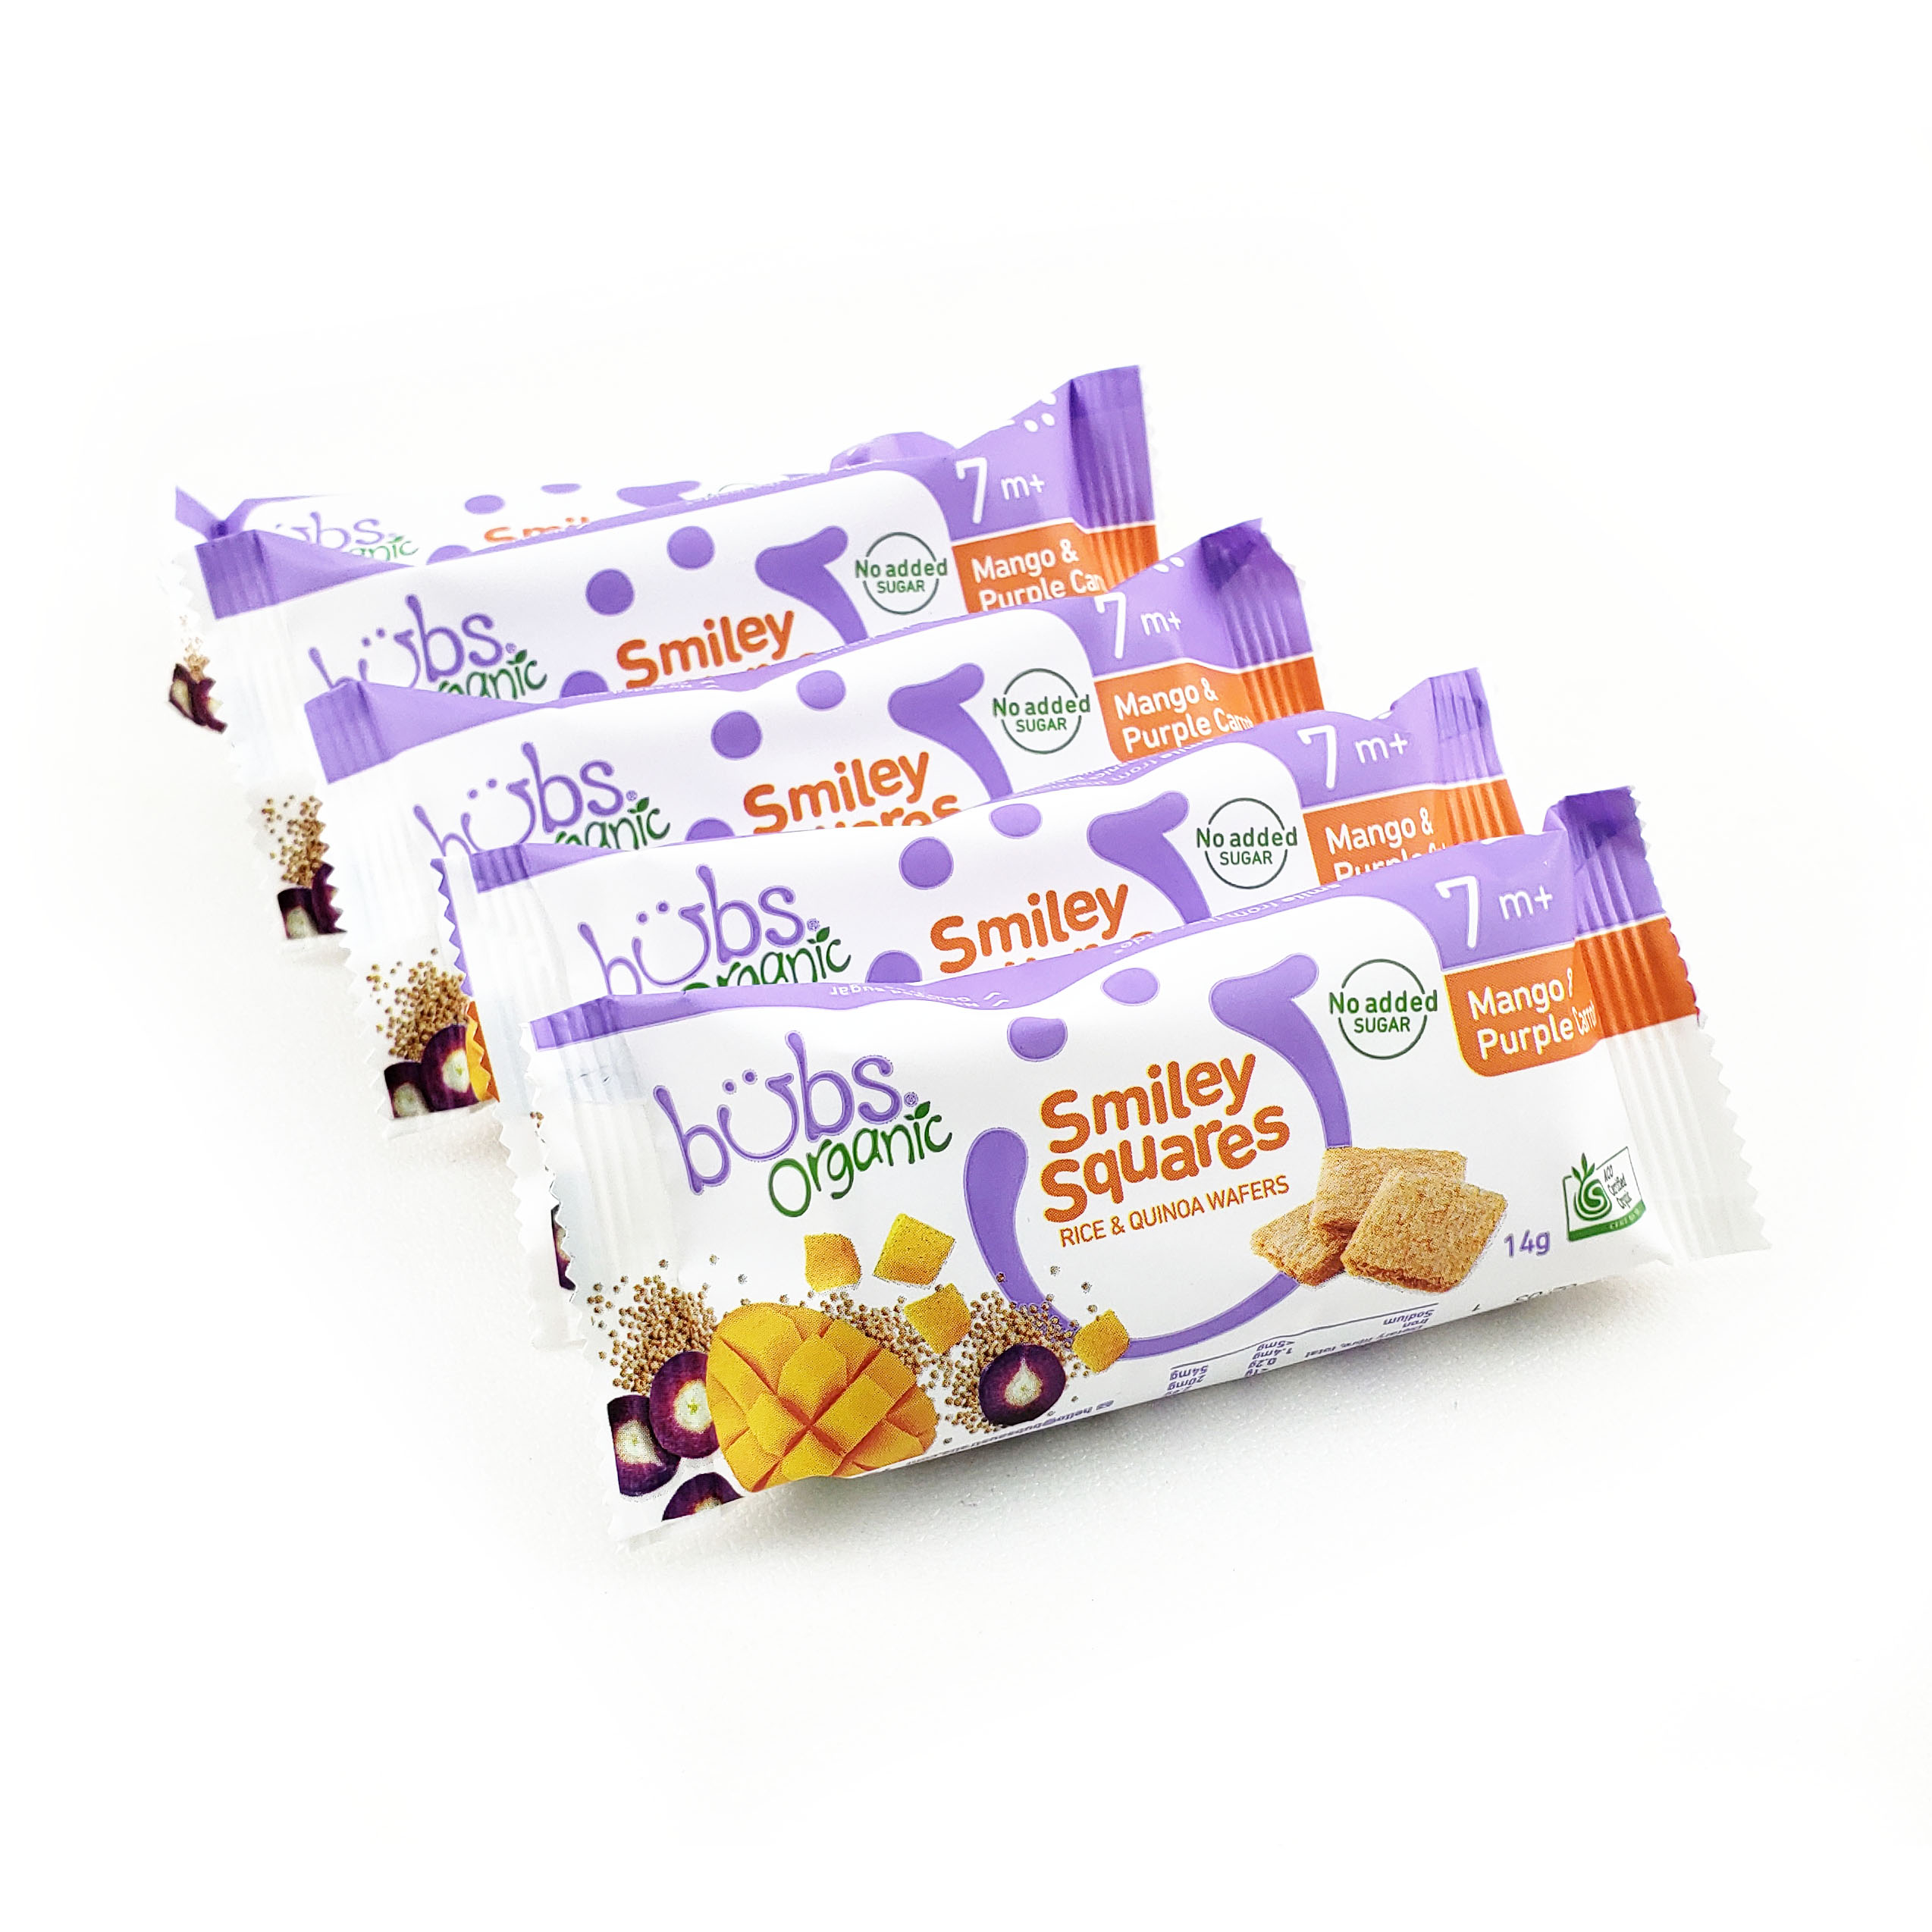 Bubs Organic Smiley Squares Rice & Quinoa Wafers - Mango & Purple Carrot 7+Months 5pieces - AUS*